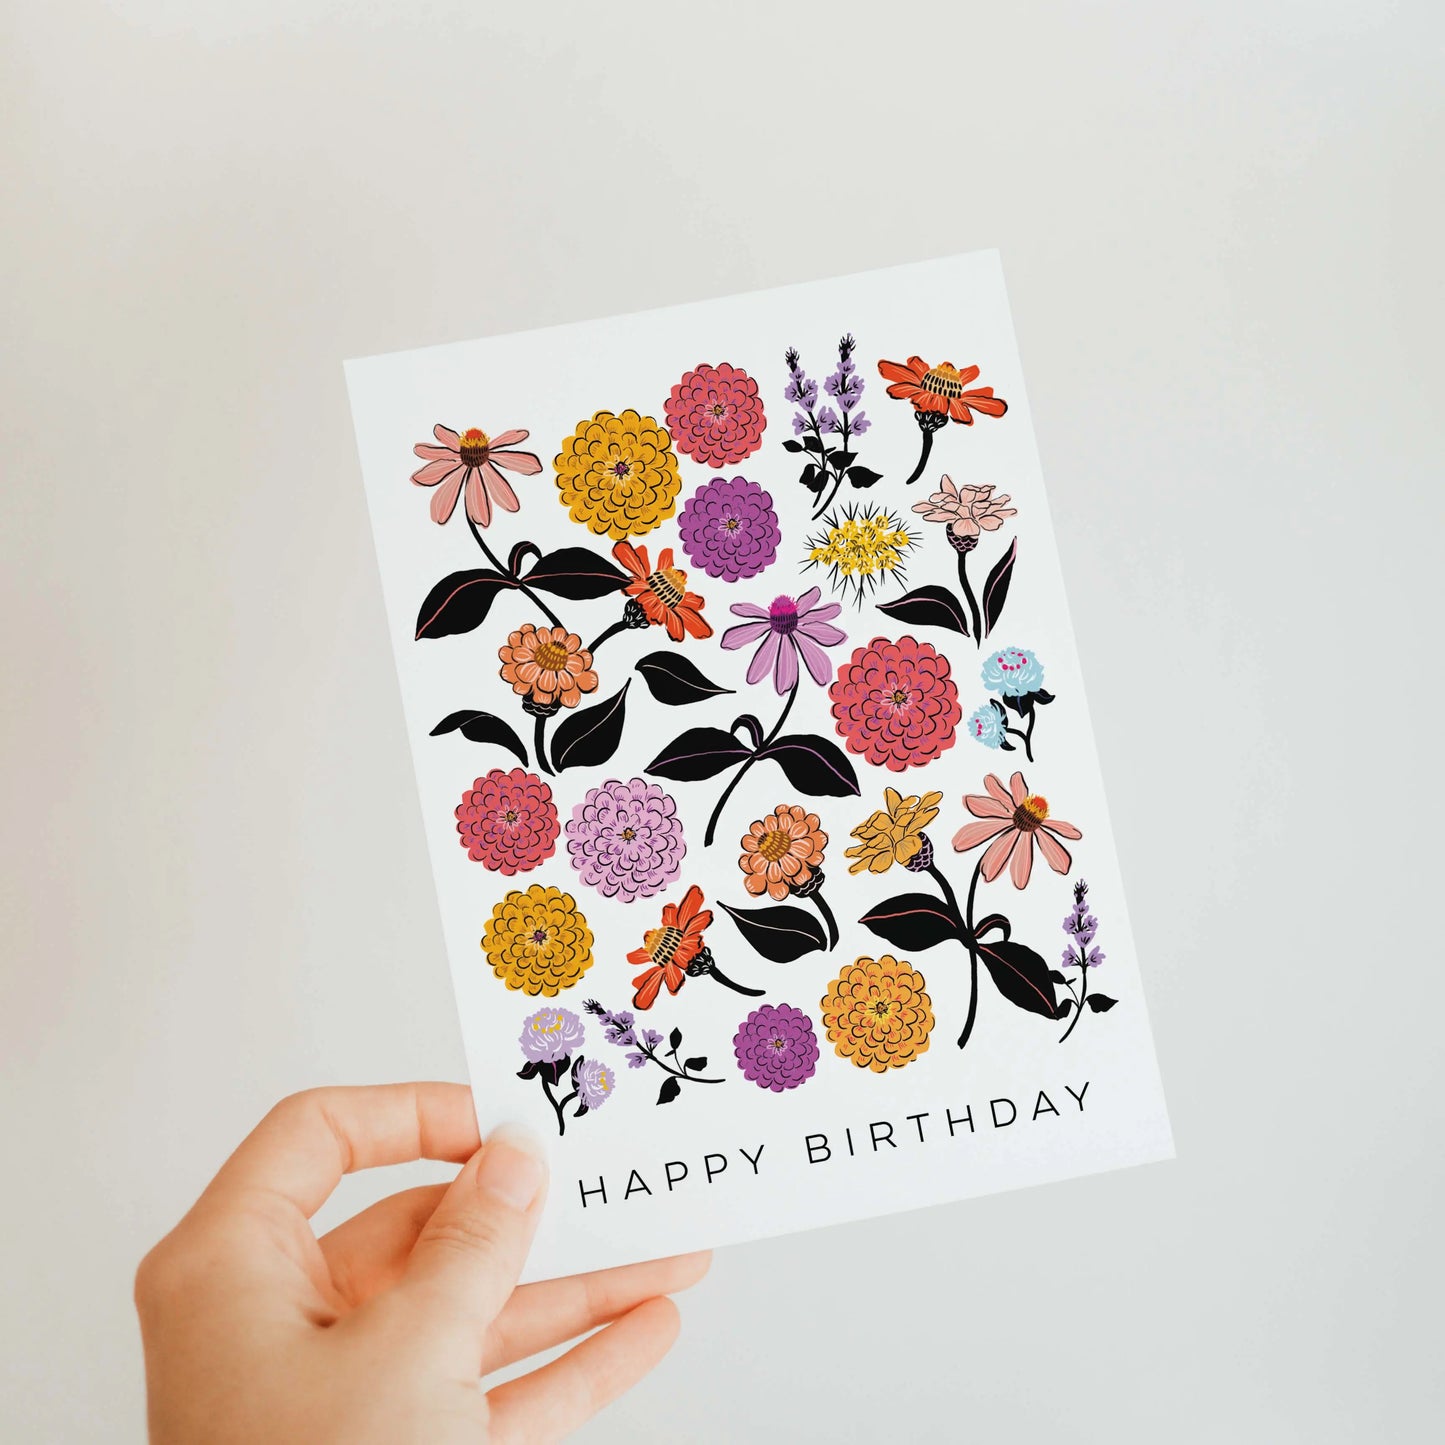 Zinnias Birthday Greeting Card - Moon Room Shop and Wellness